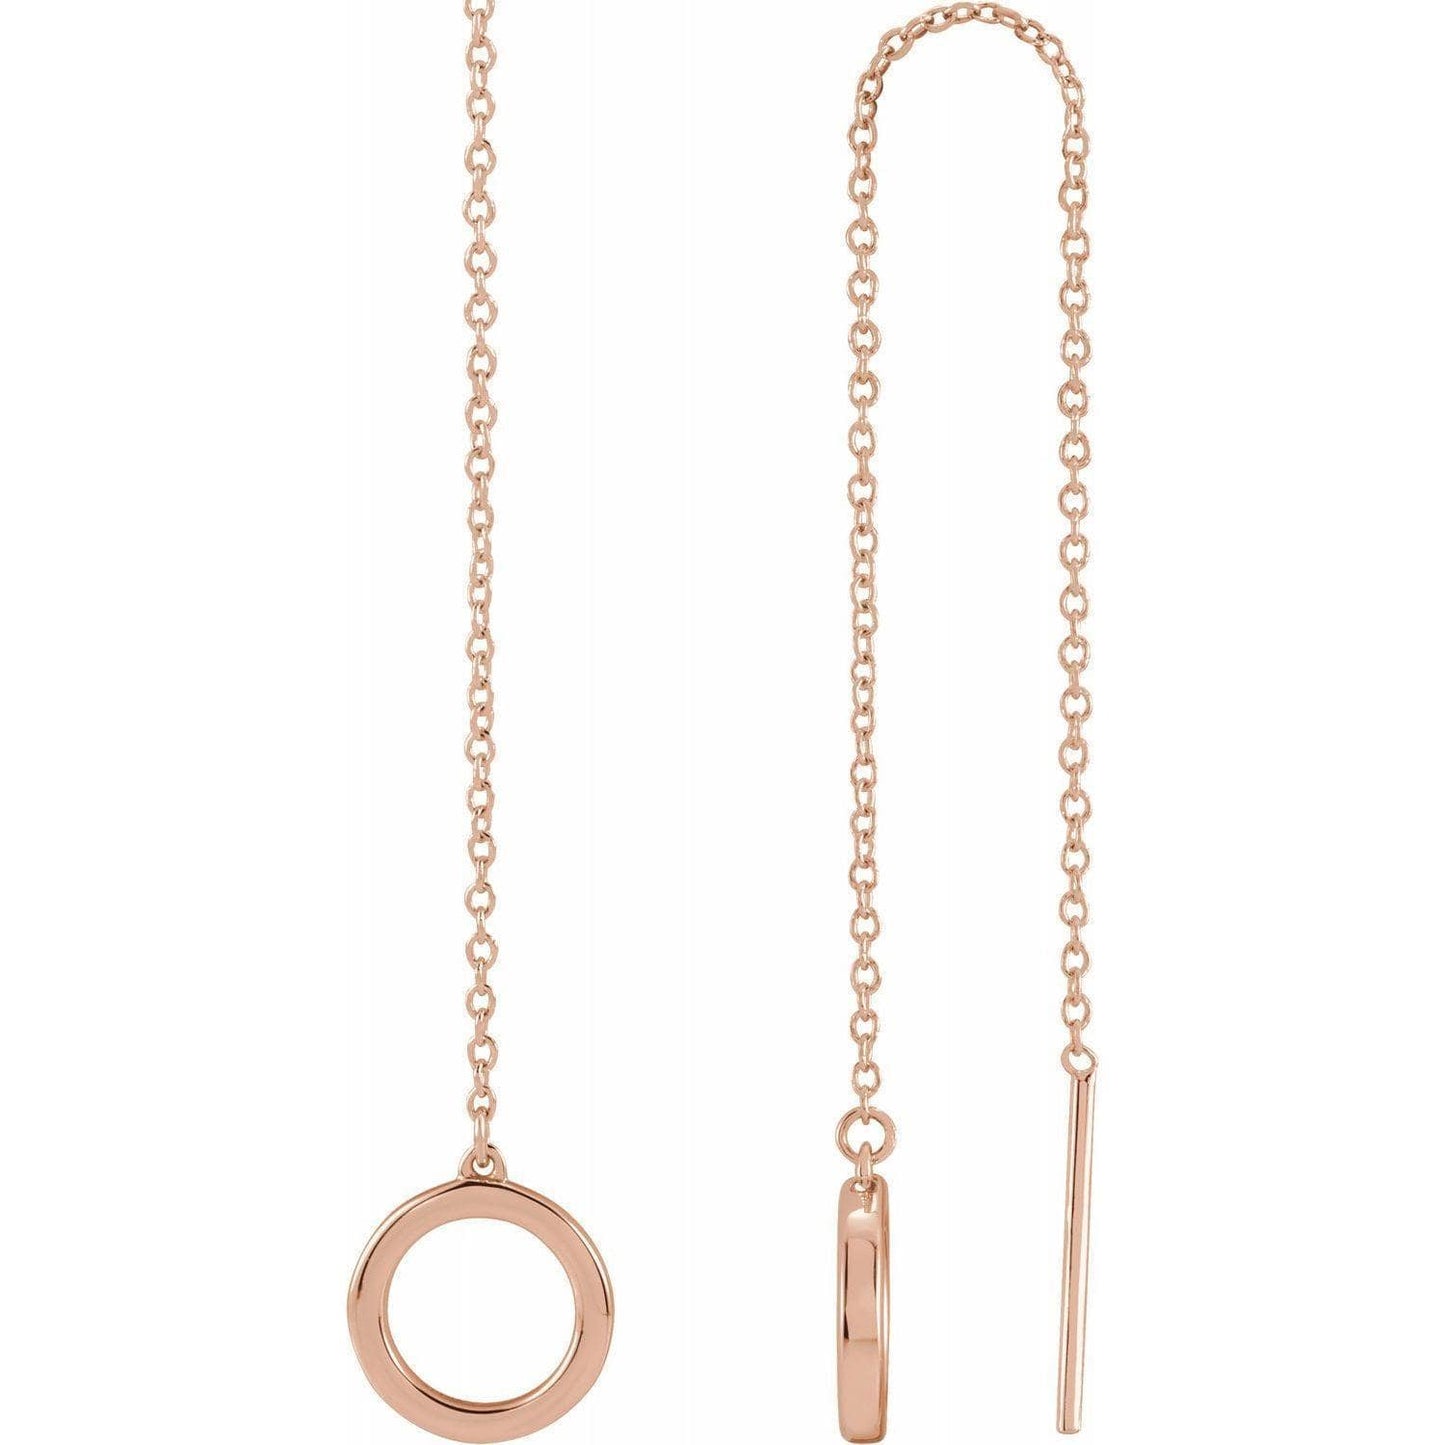 Geometric Gold Circle Chain Threader Earrings Earrings by Nodeform